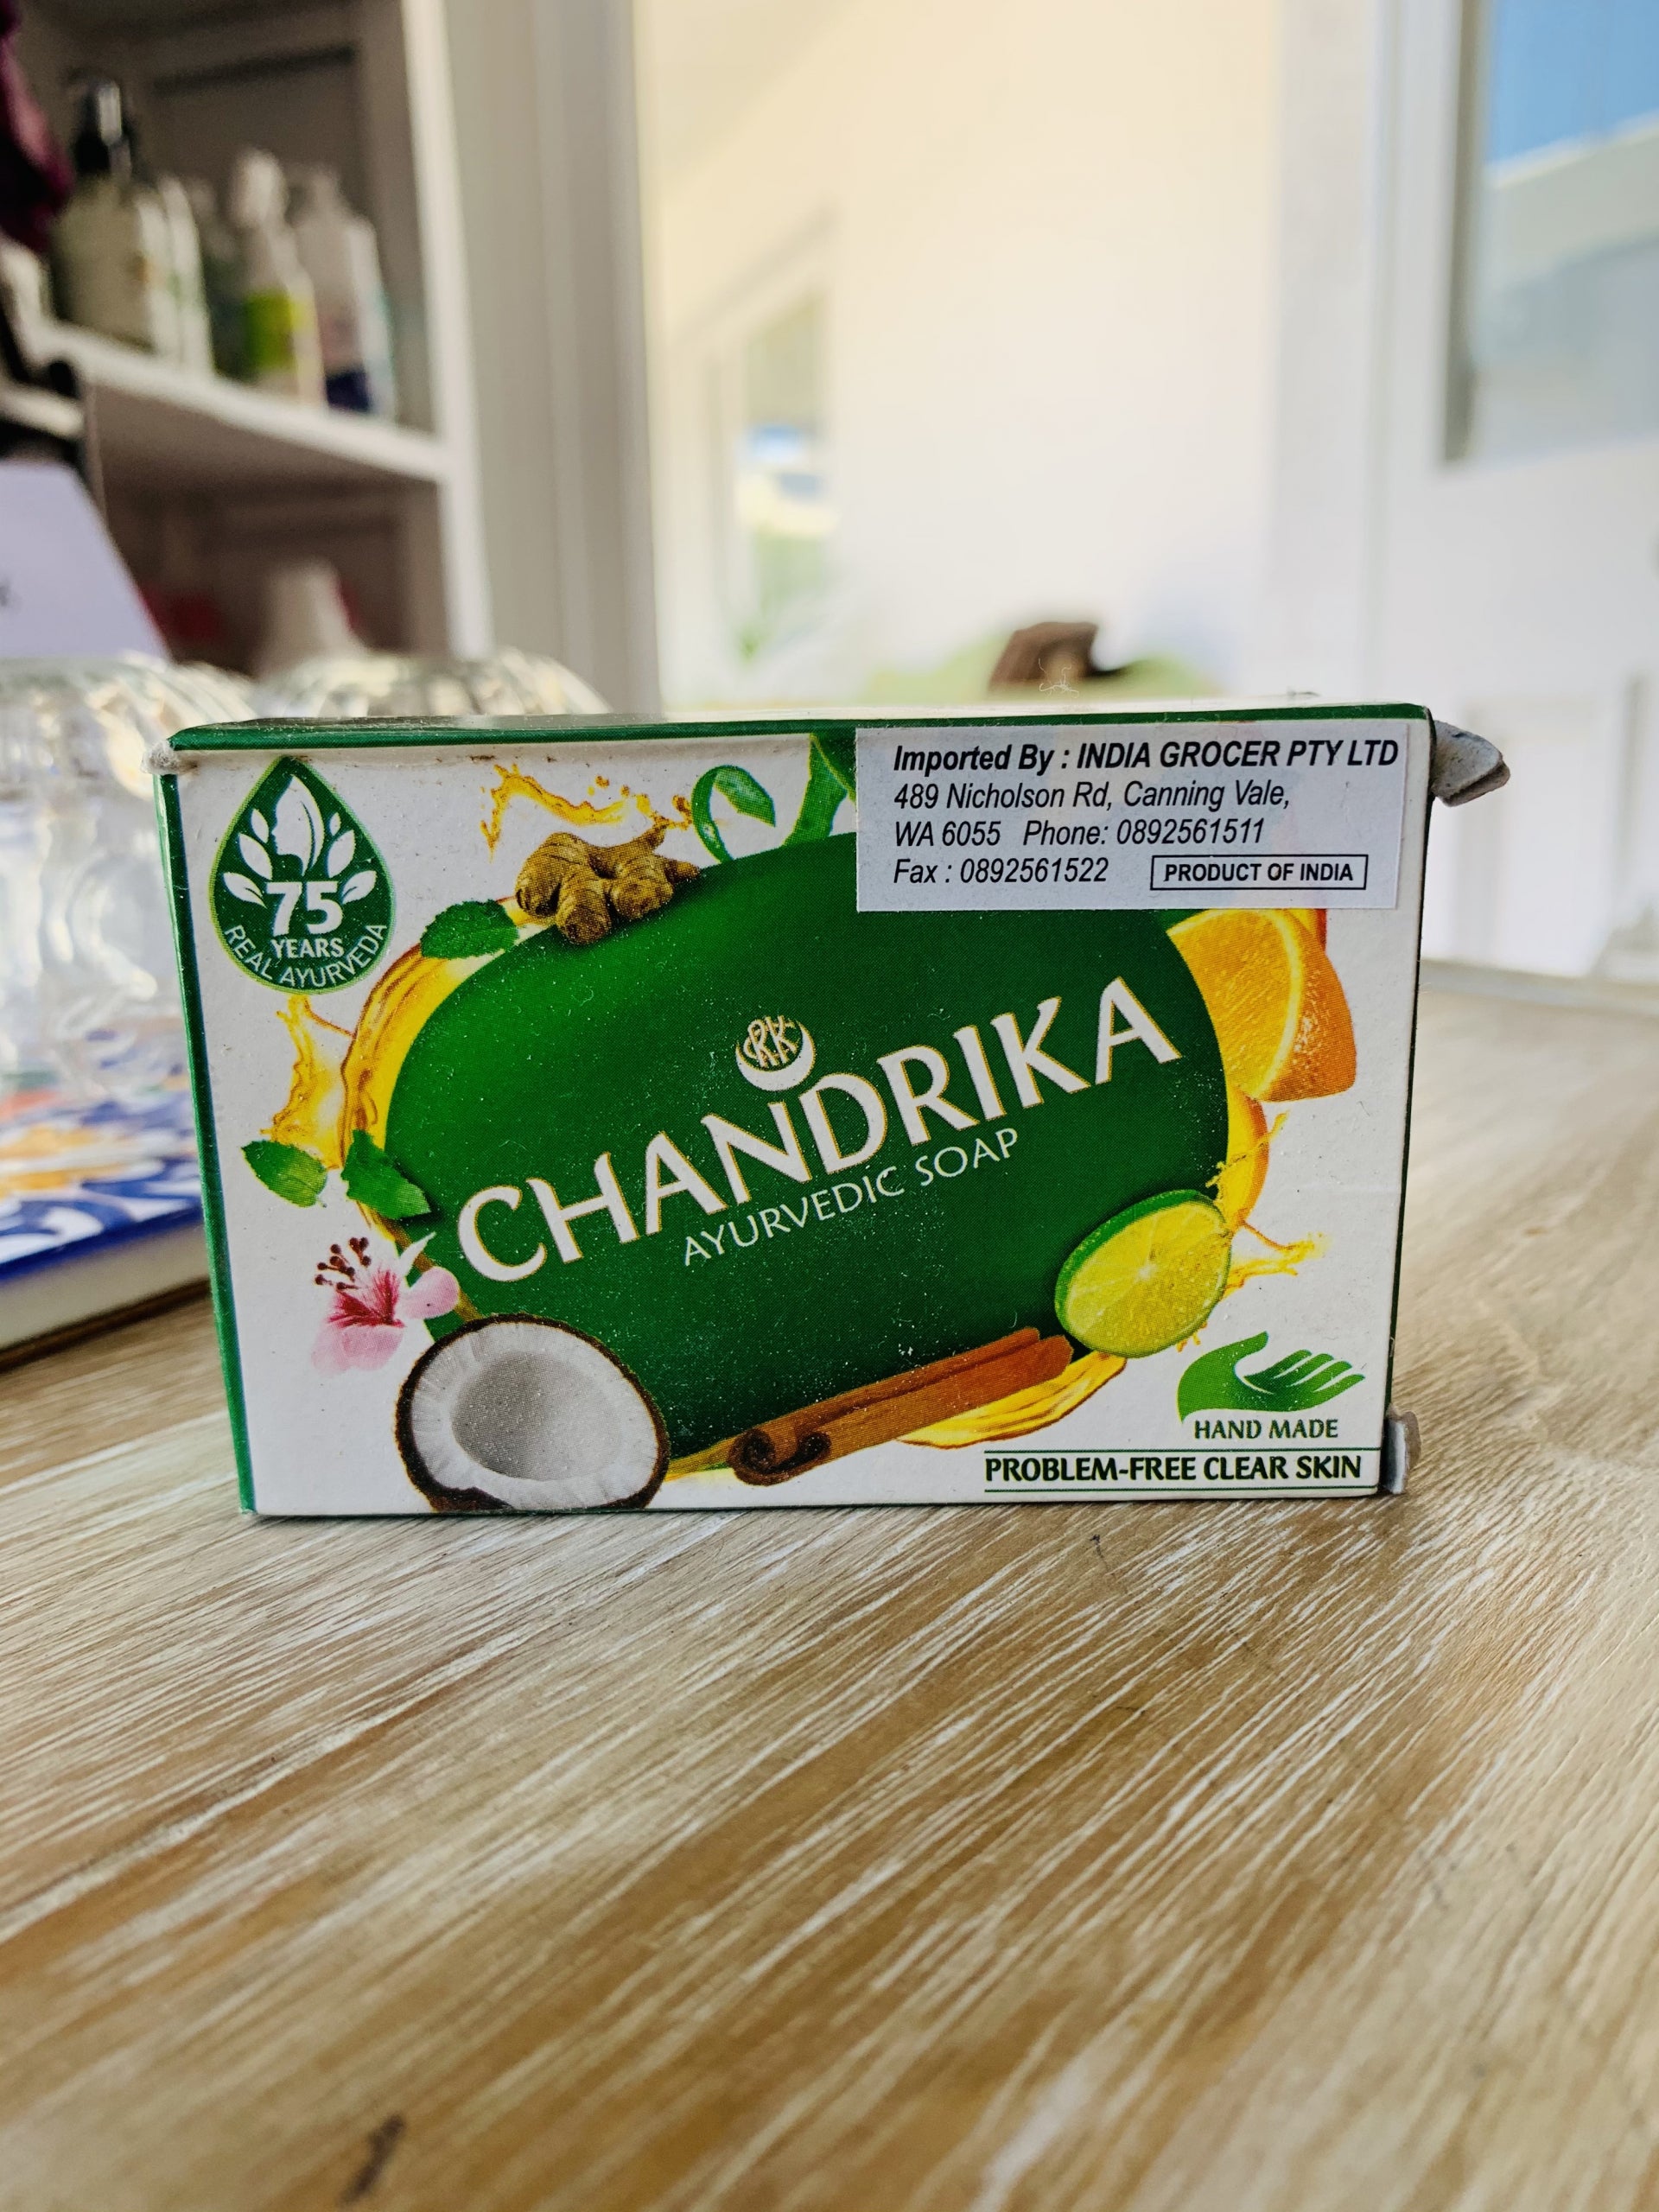 Chandrika Sandalwood Soap